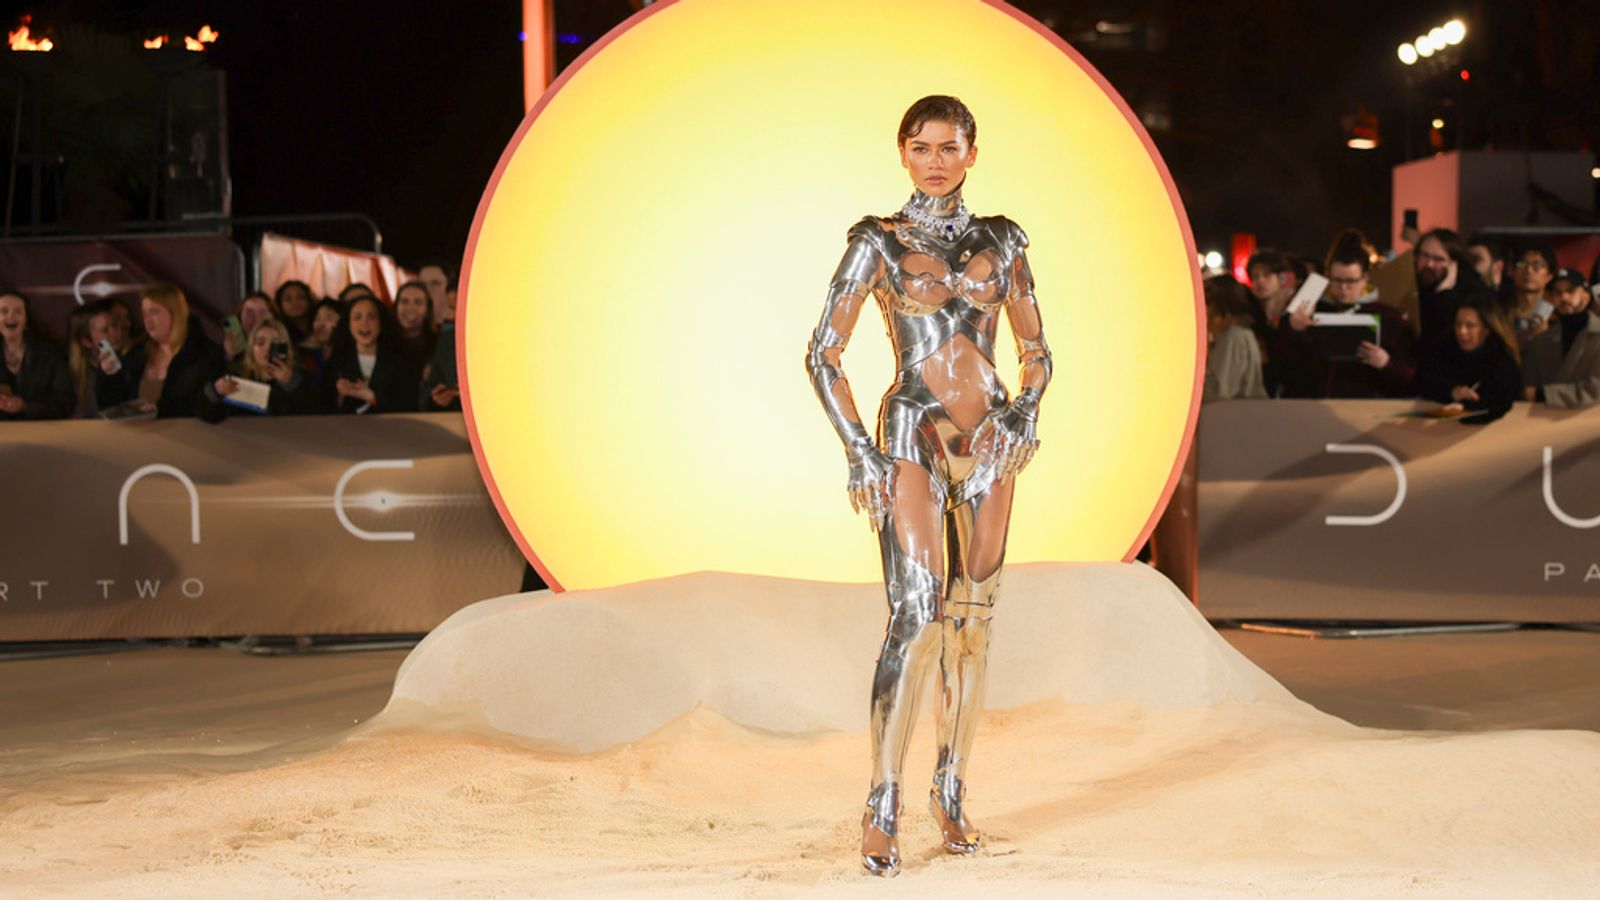 Zendaya Steals the Show in Futuristic Fashion at Dune Premiere